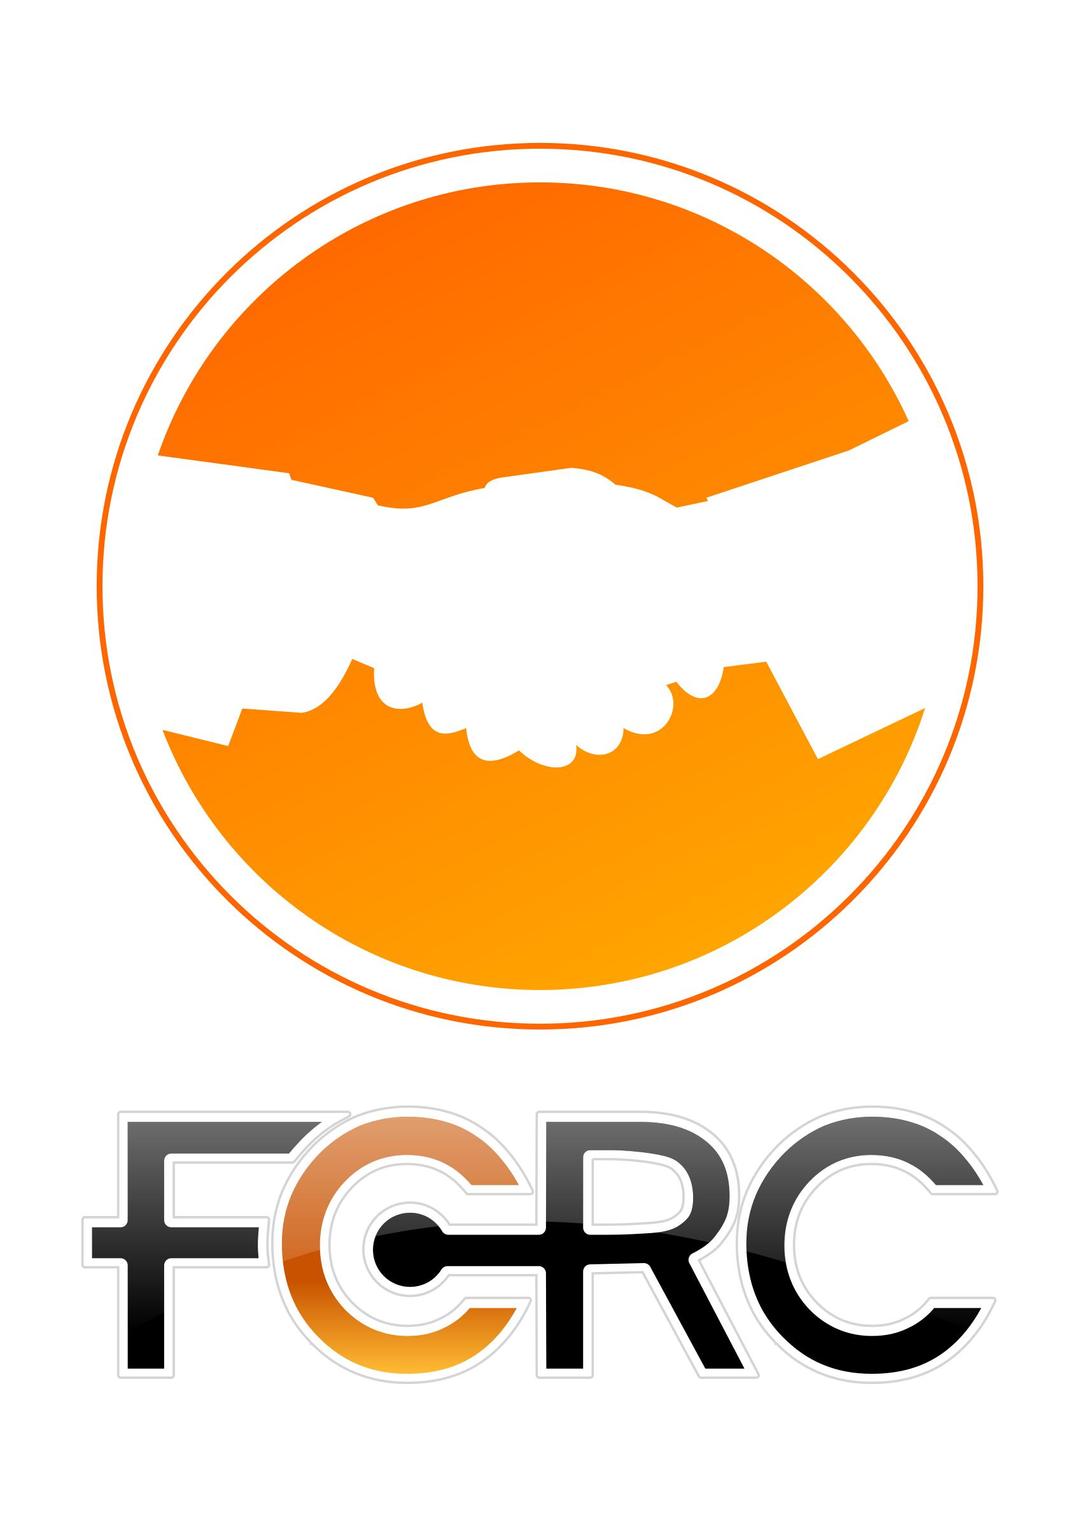 FCRC logo handshake png transparent